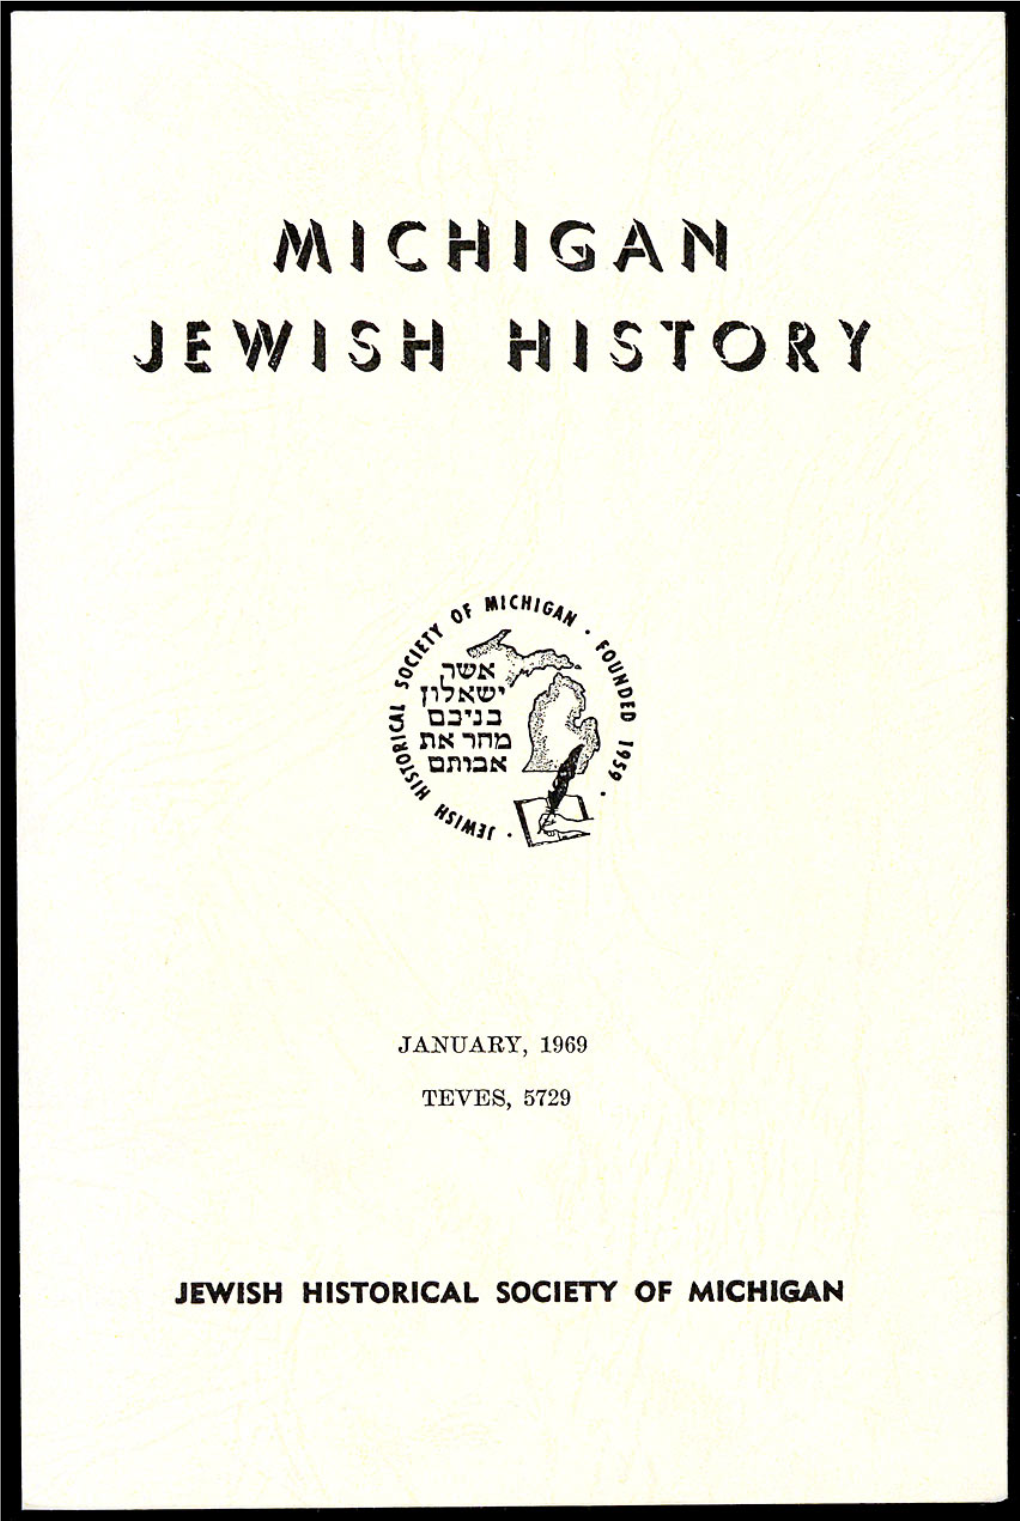 Michigaint JEWISH HISTORY